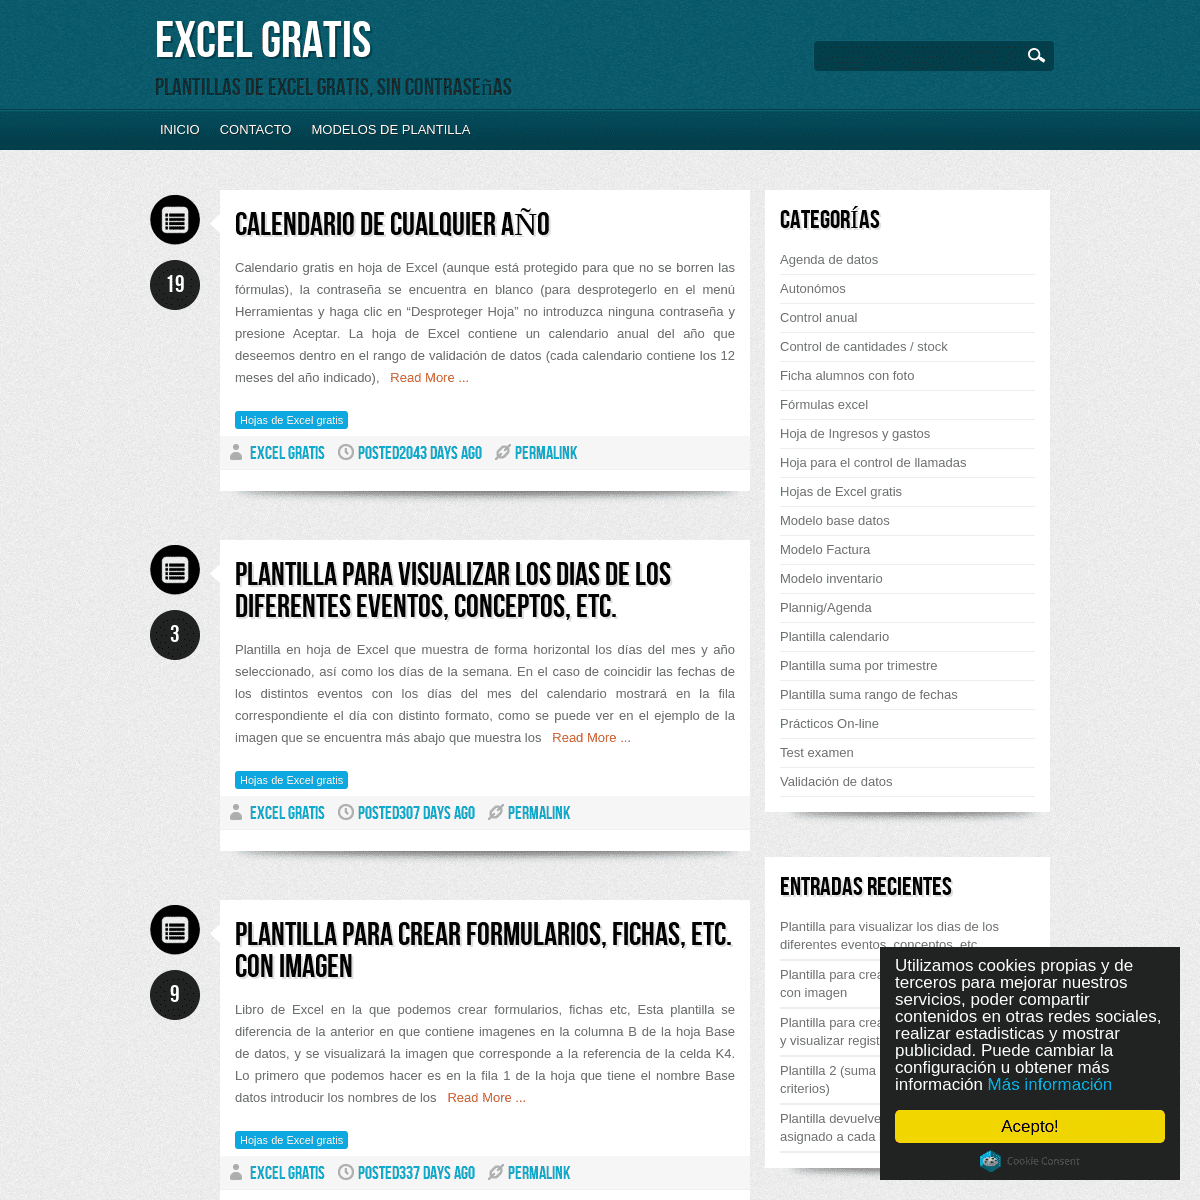 A complete backup of excelgratis.com